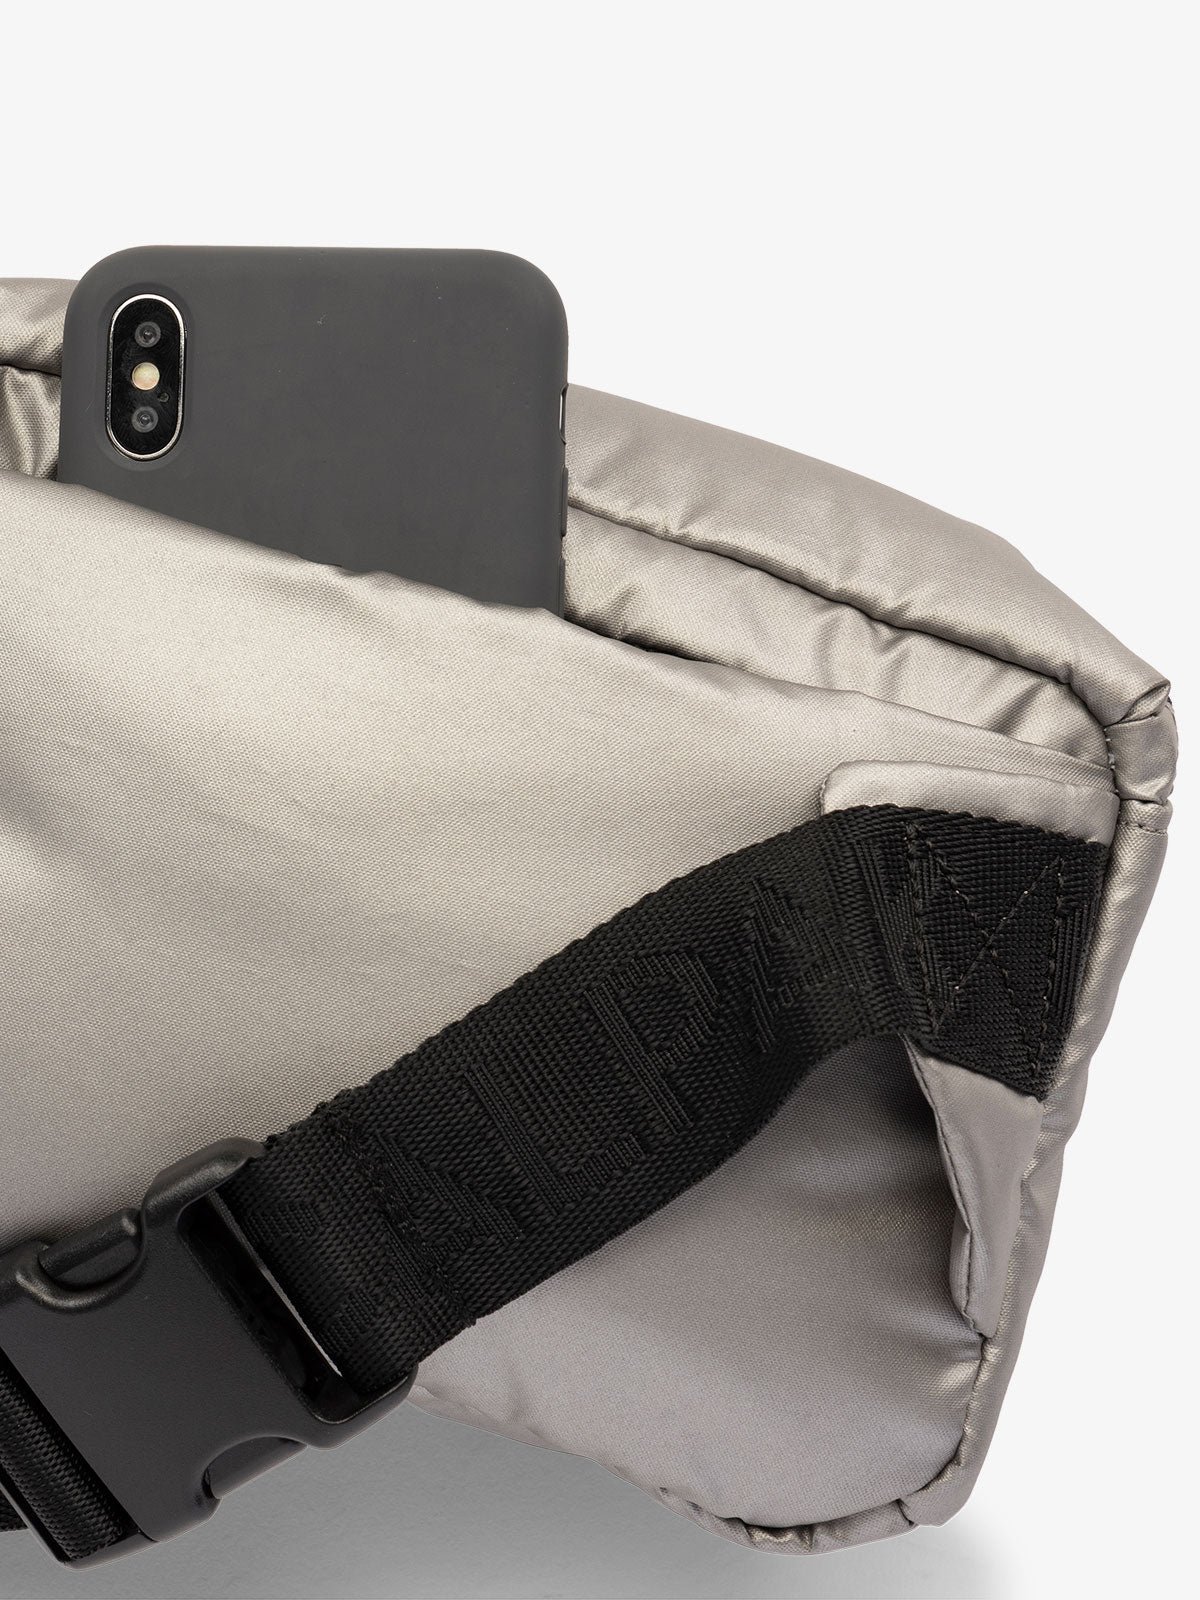 CALPAK Luka small waist bag with adjustable strap and back pocket in metallic gray